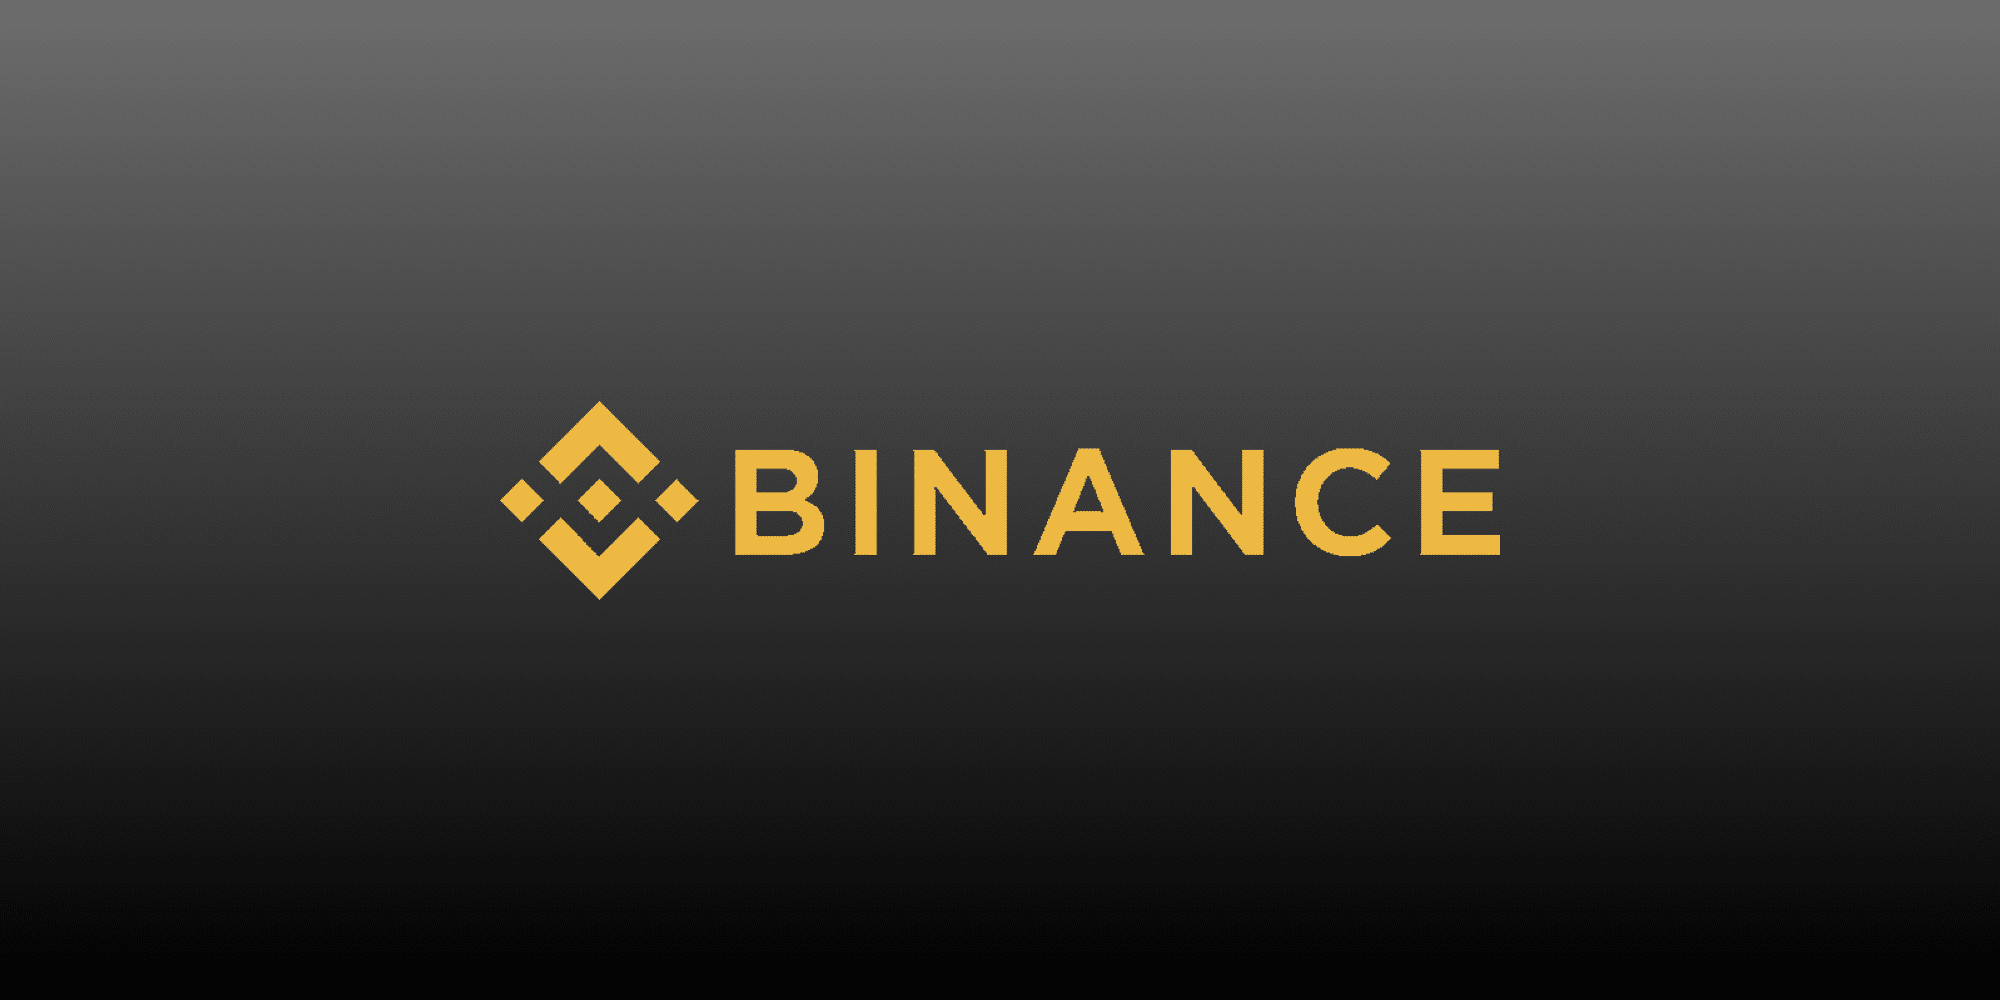 Binance to Launch Its Own Blockchain for Exchange, BNB Token